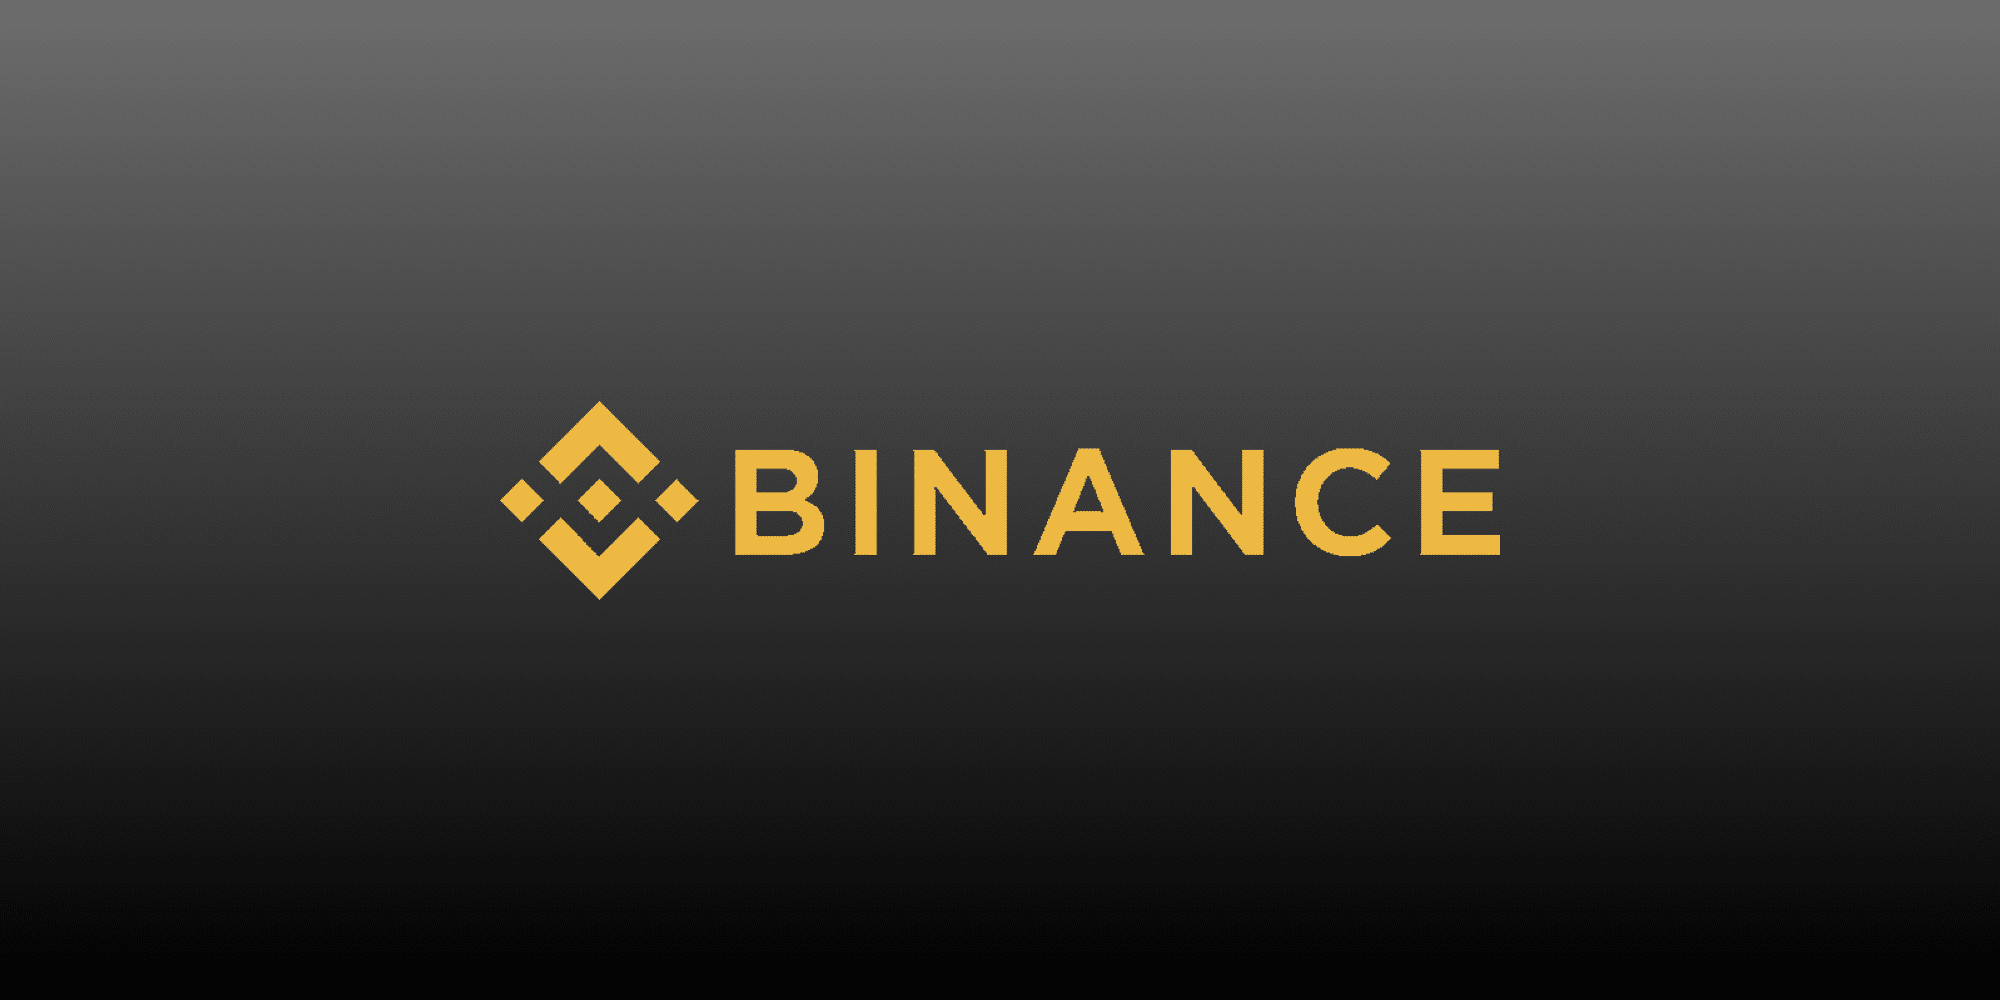 Binance to Launch Its Own Blockchain for Exchange, BNB Token